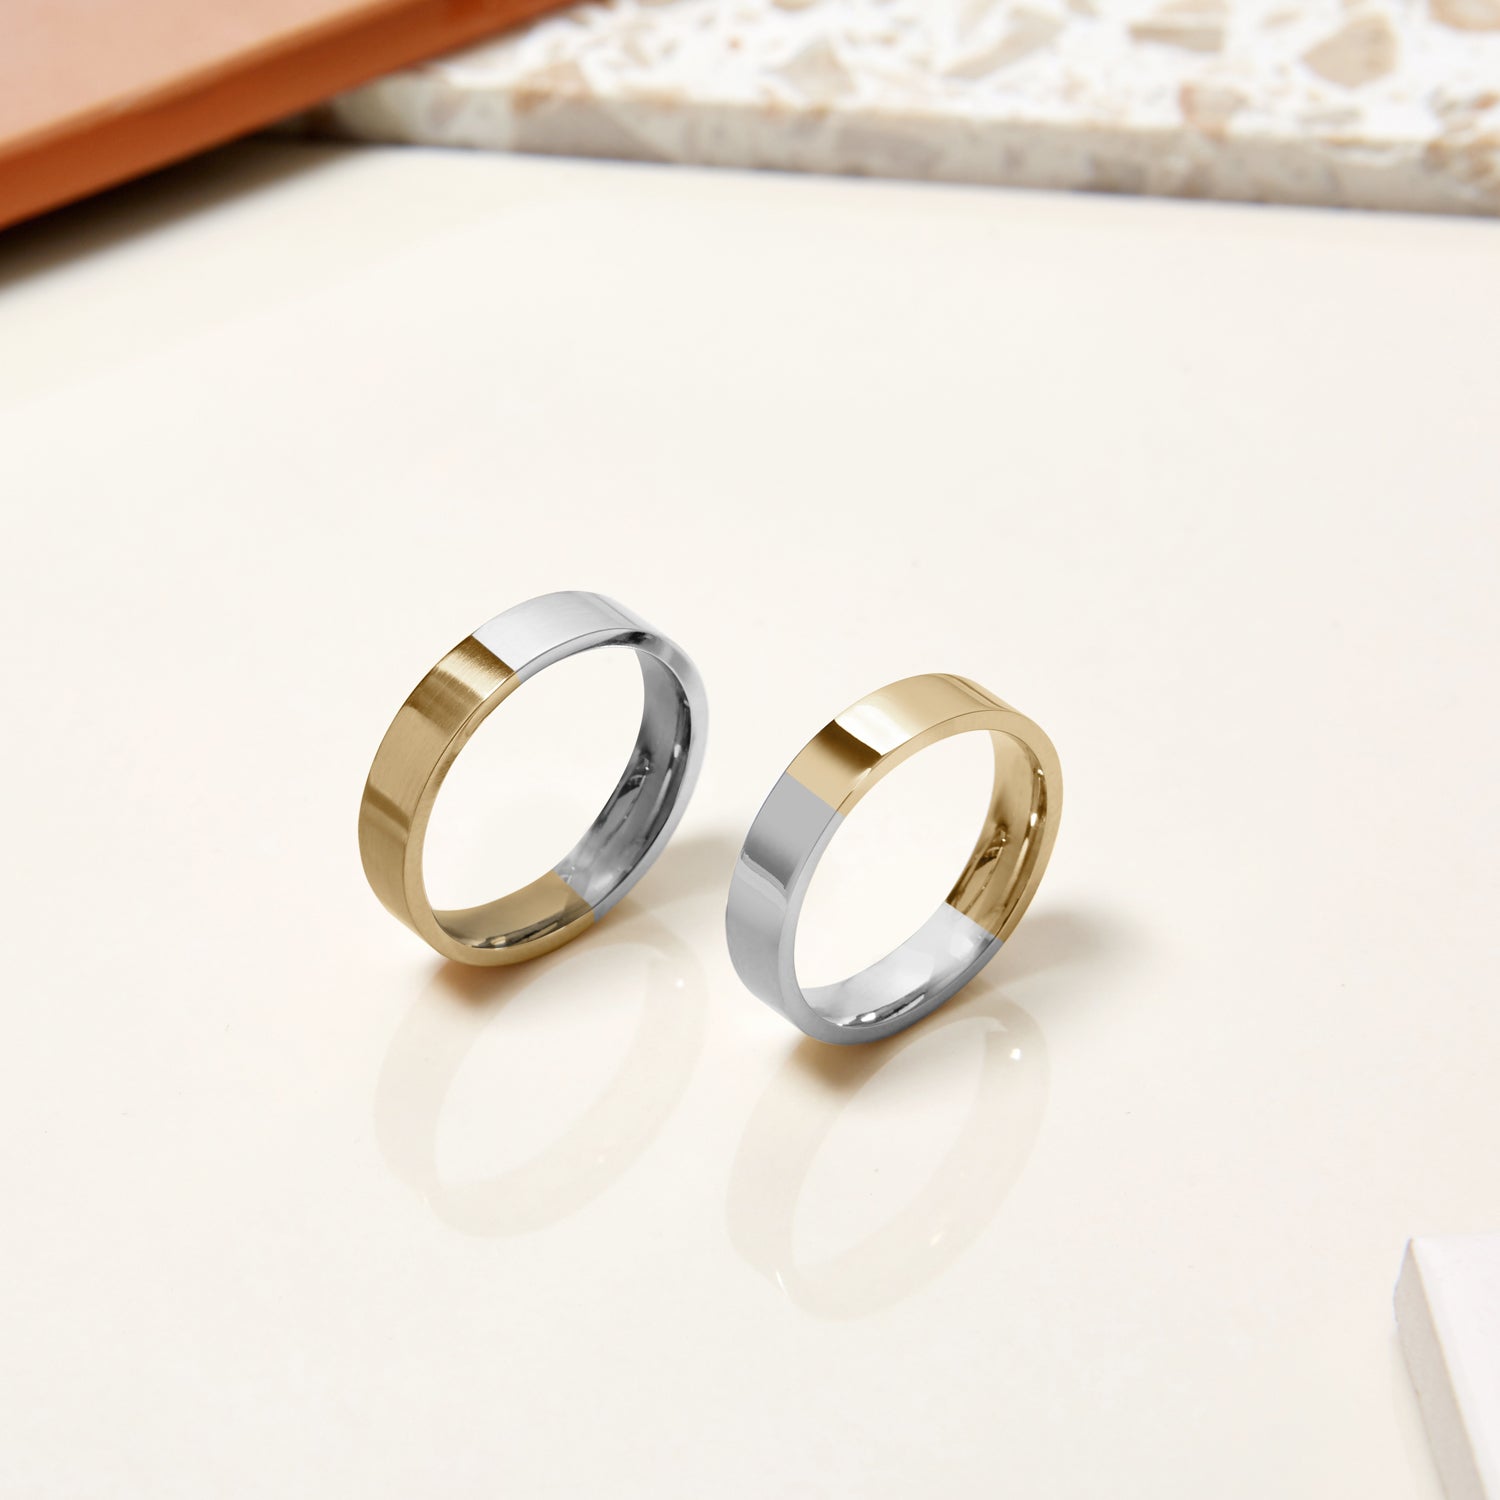 Contemporary Men's Wedding Rings